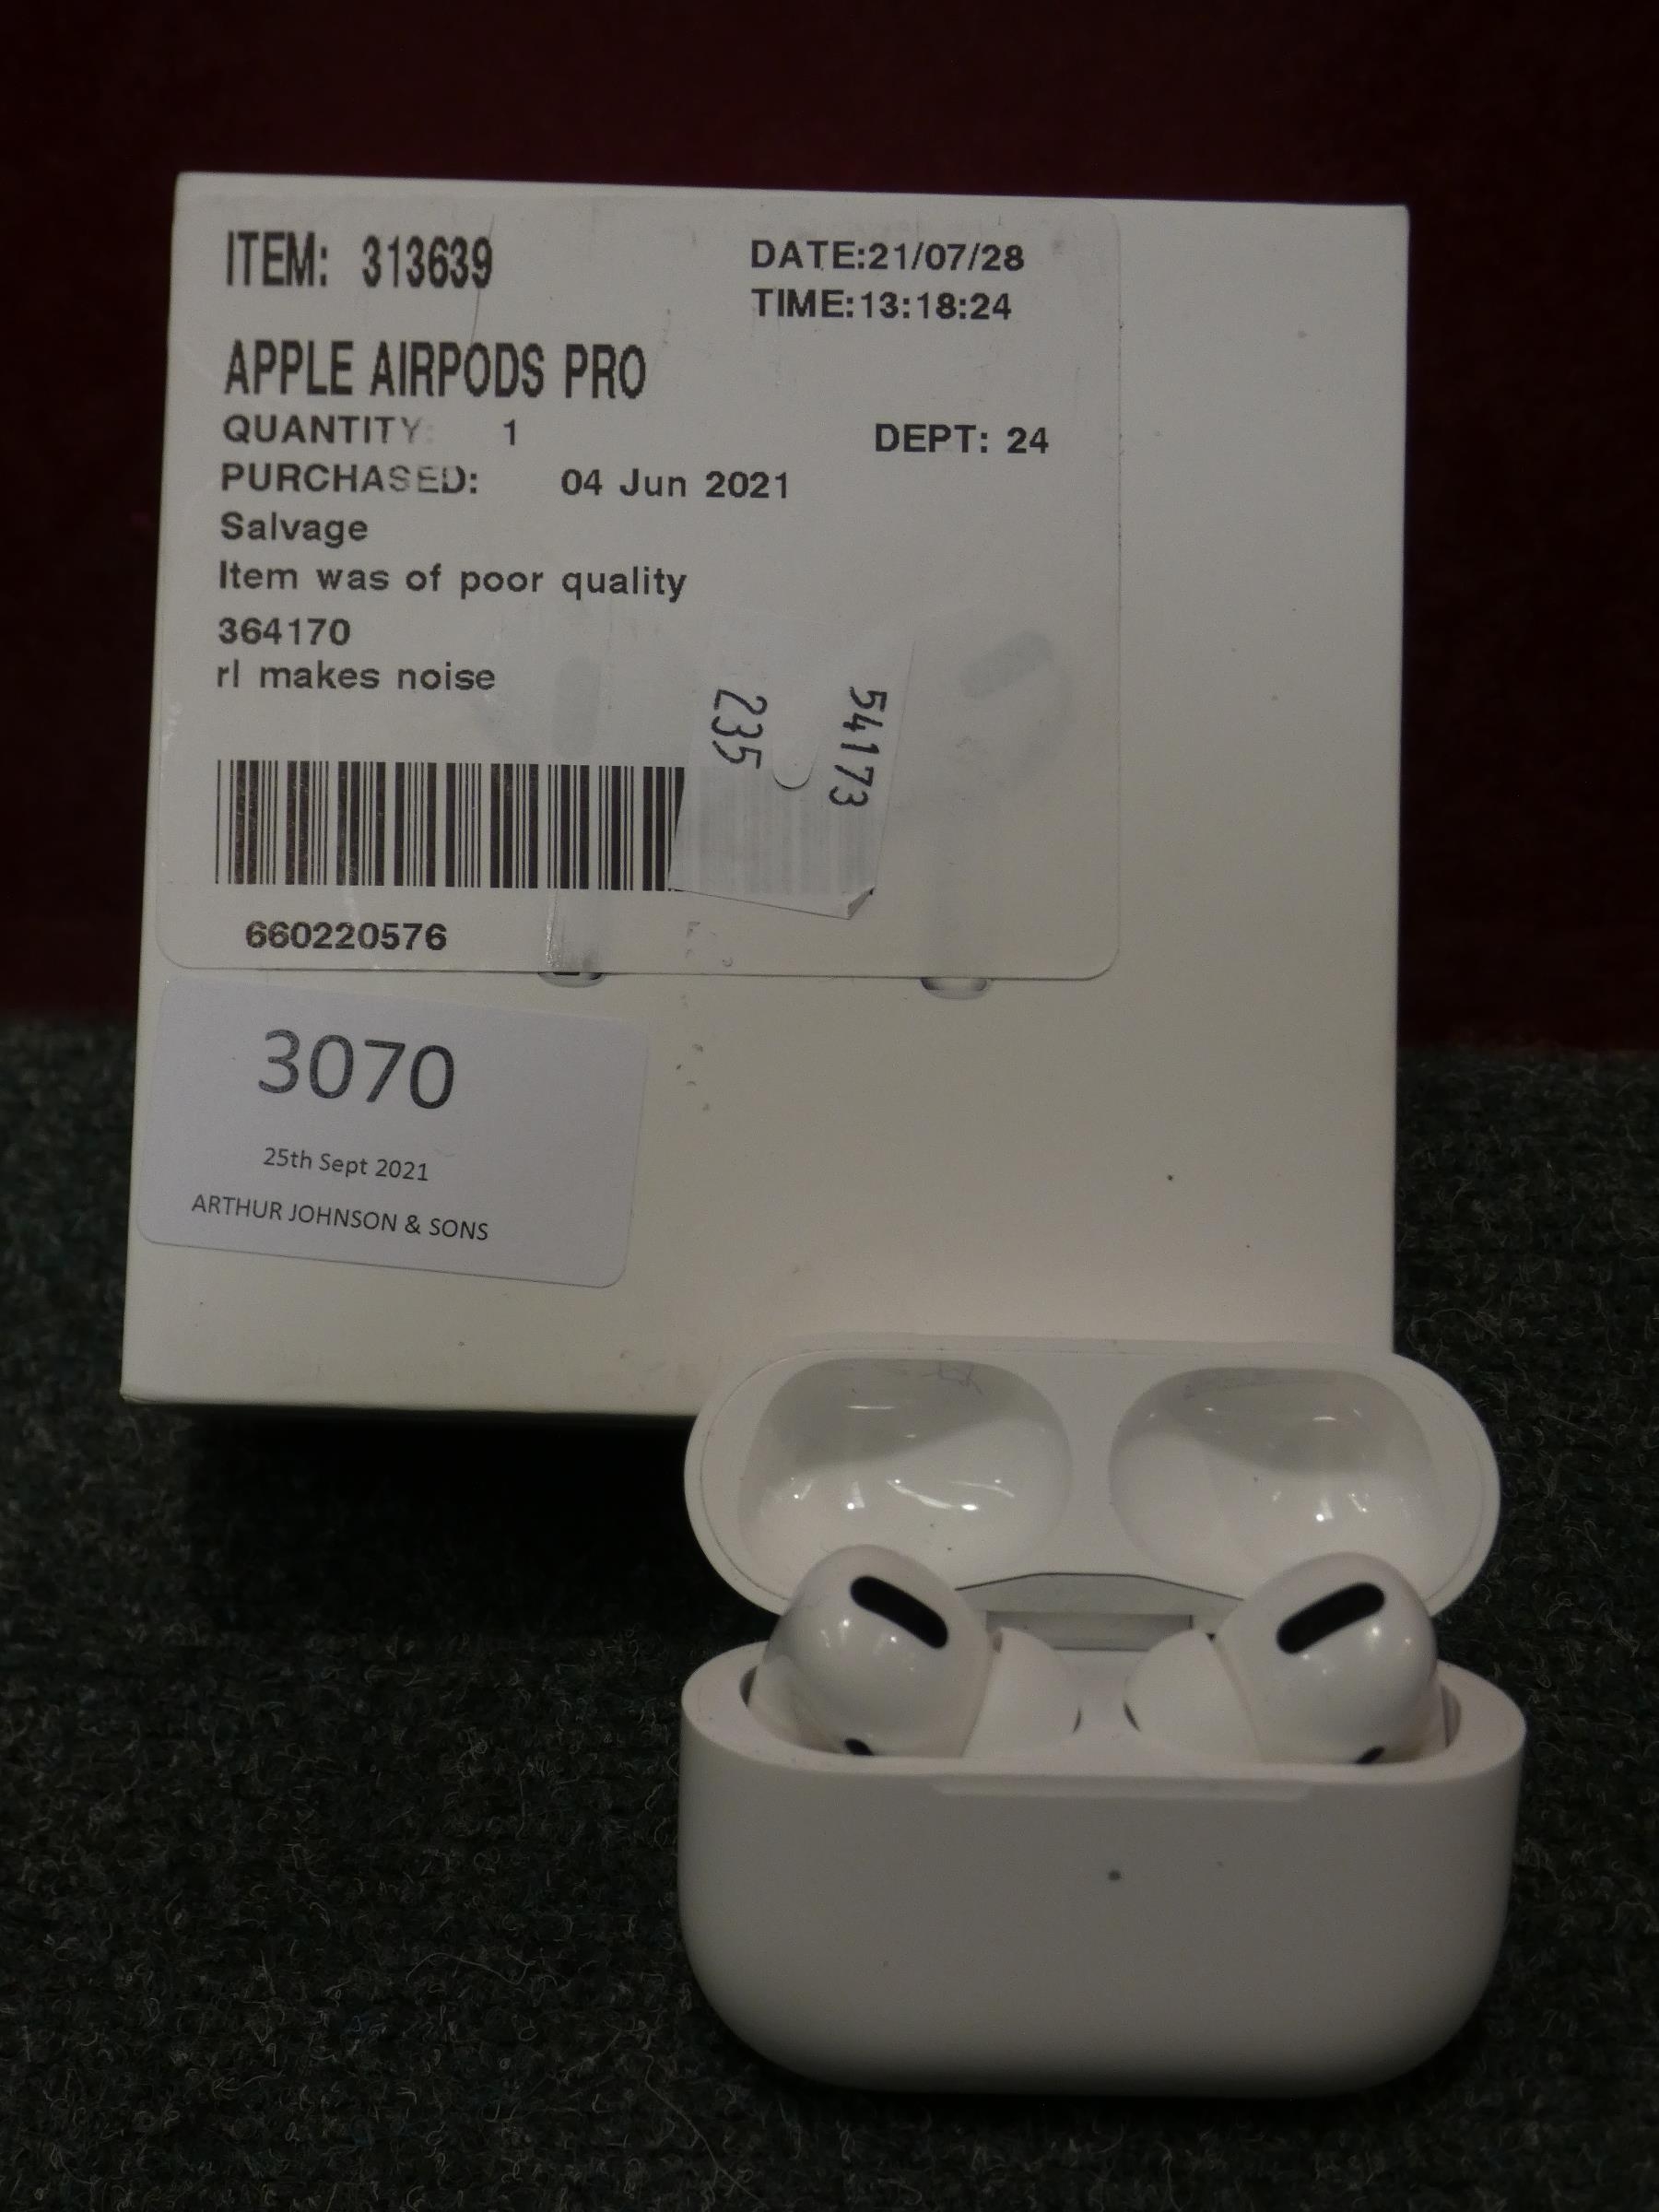 Apple Airpods Pro (model:- MWP22ZM/A), RRP £189.99 + VAT (235-229 